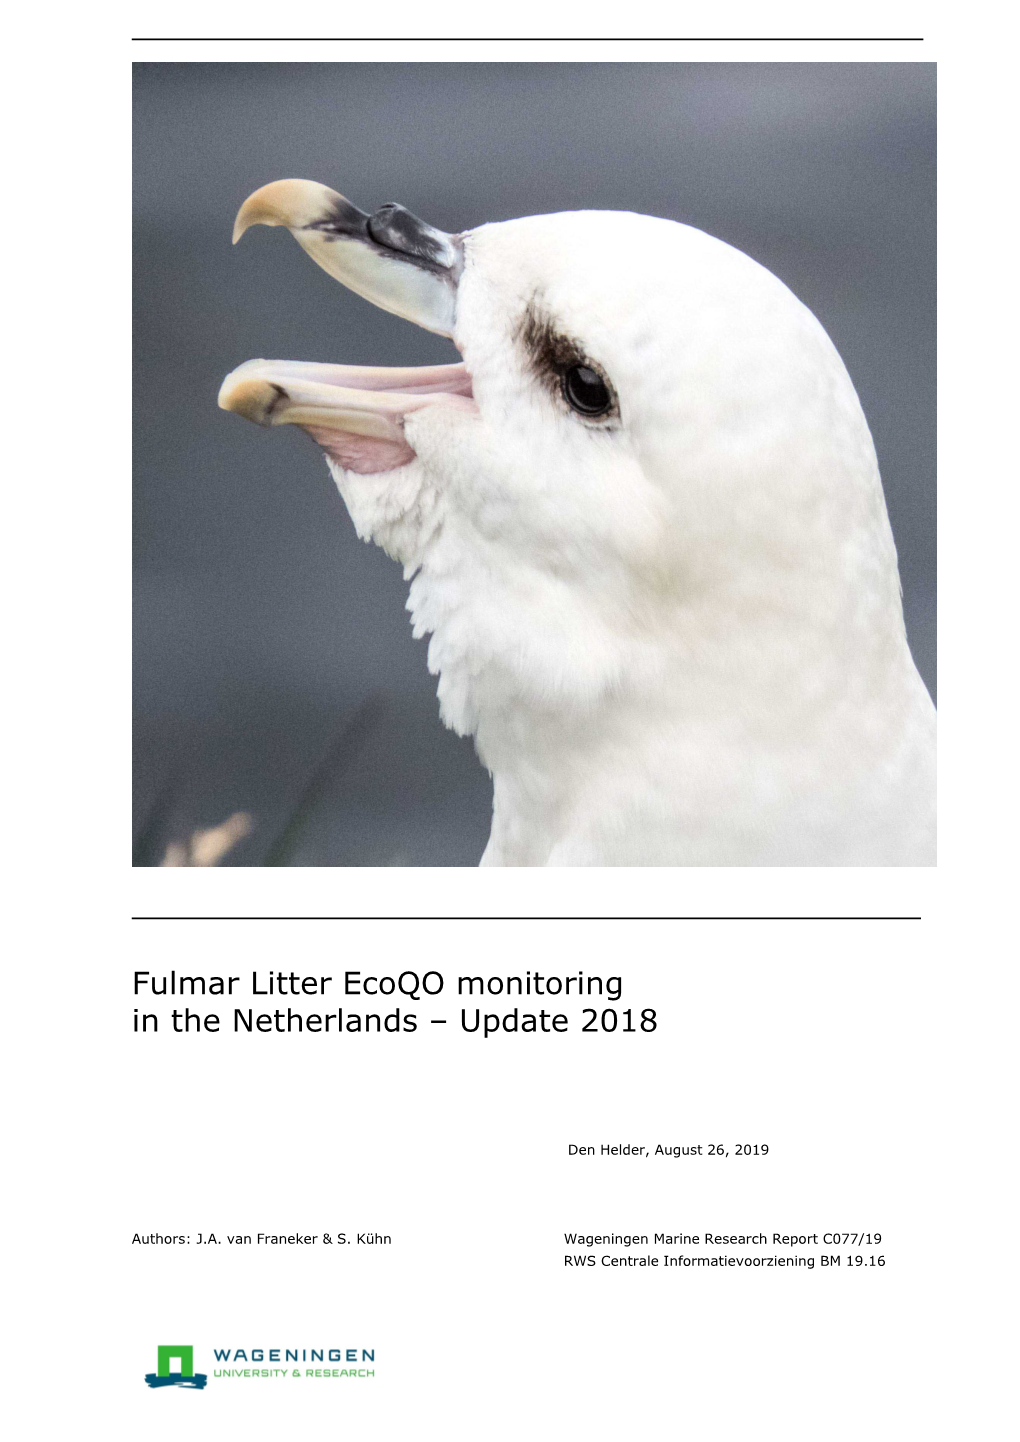 Fulmar Litter Ecoqo Monitoring in the Netherlands – Update 2018